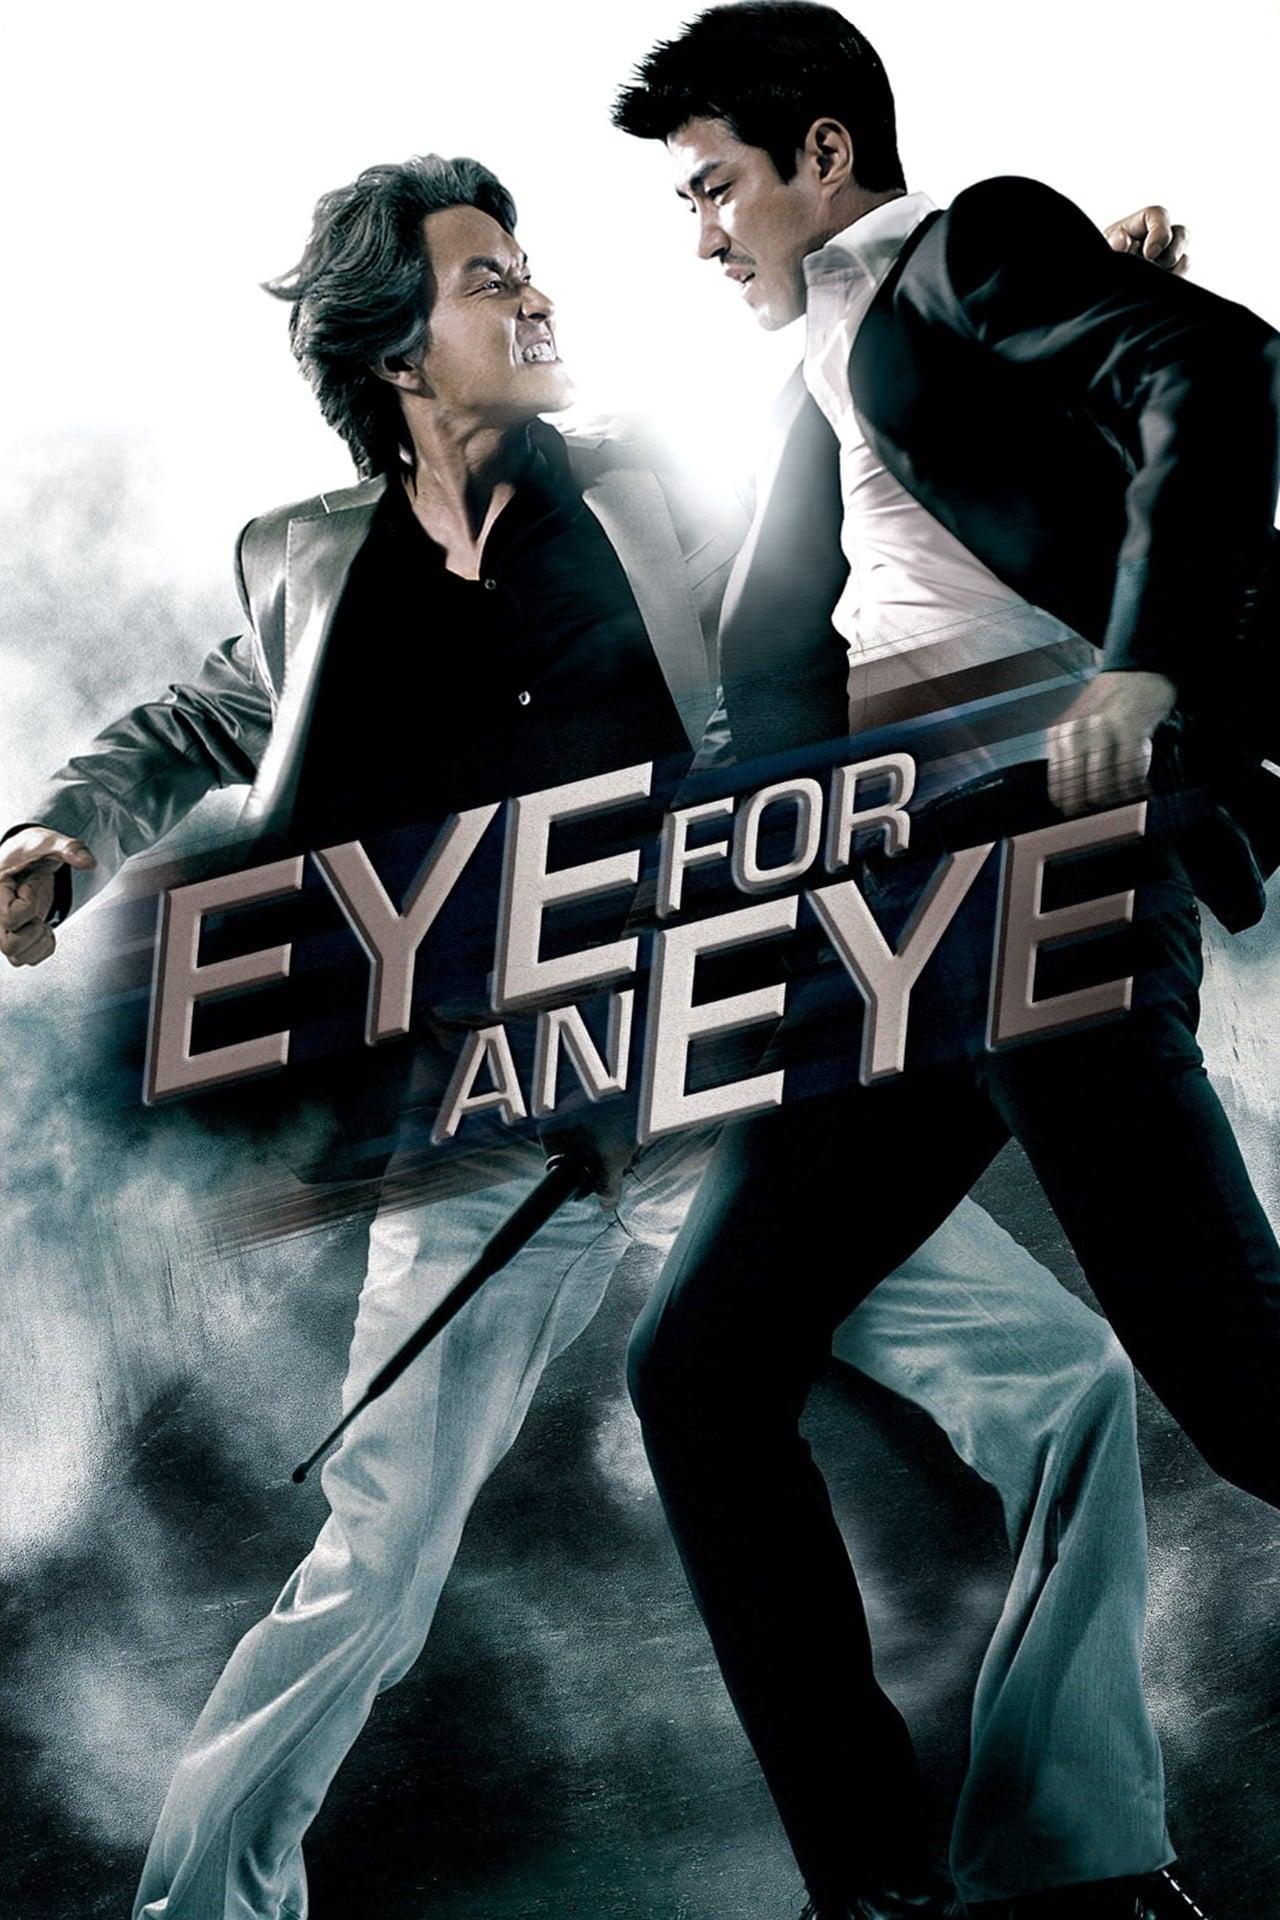 Eye For An Eye poster